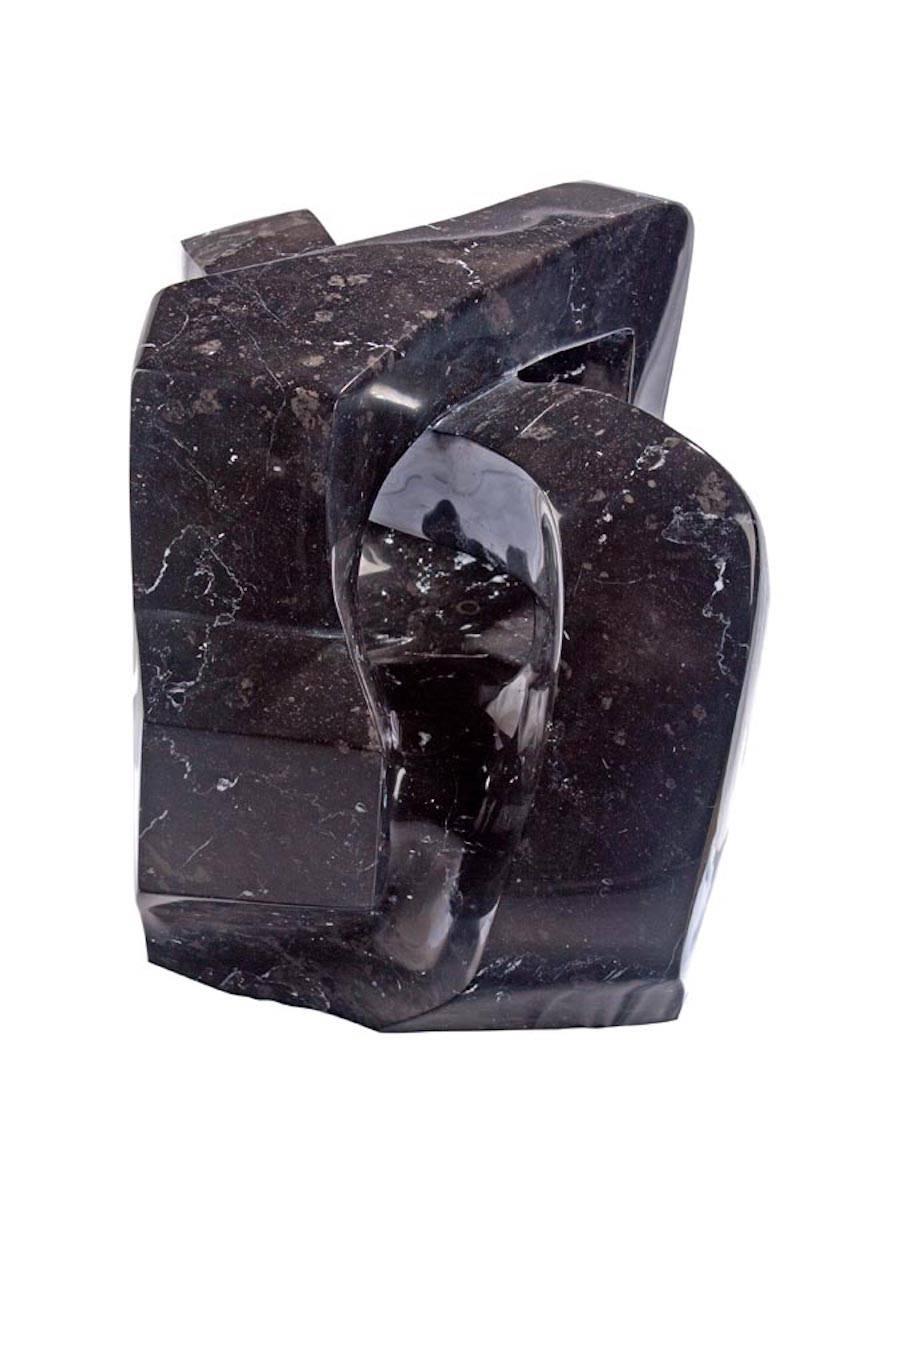 Knott, Fantastic Black Marble Sculpture by Eugenia Belden In Excellent Condition For Sale In San Pedro Garza Garcia, Nuevo Leon